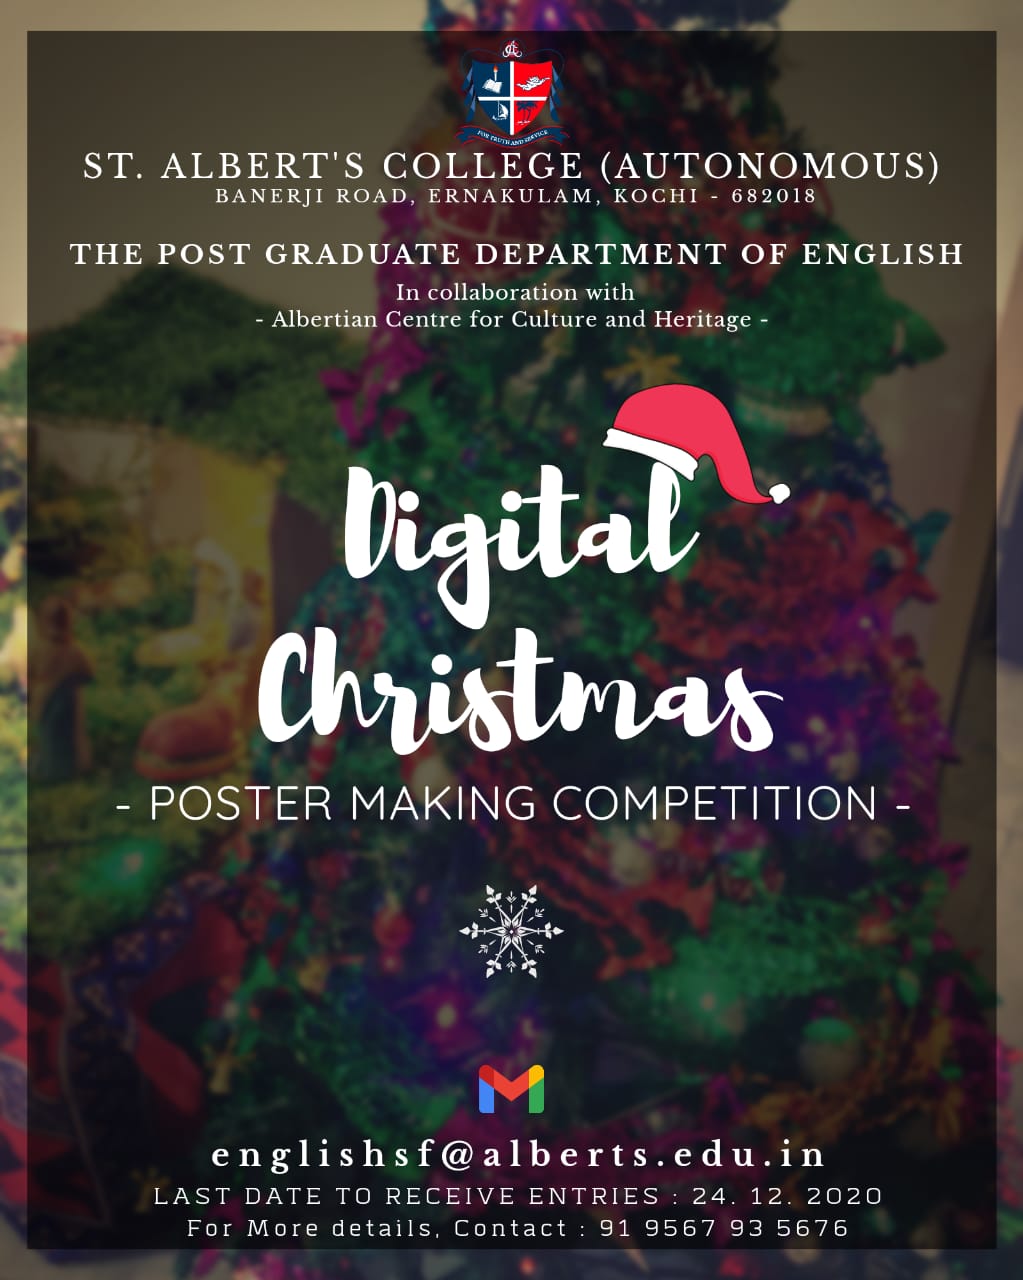 Digital Christmas Poster Making Competiton